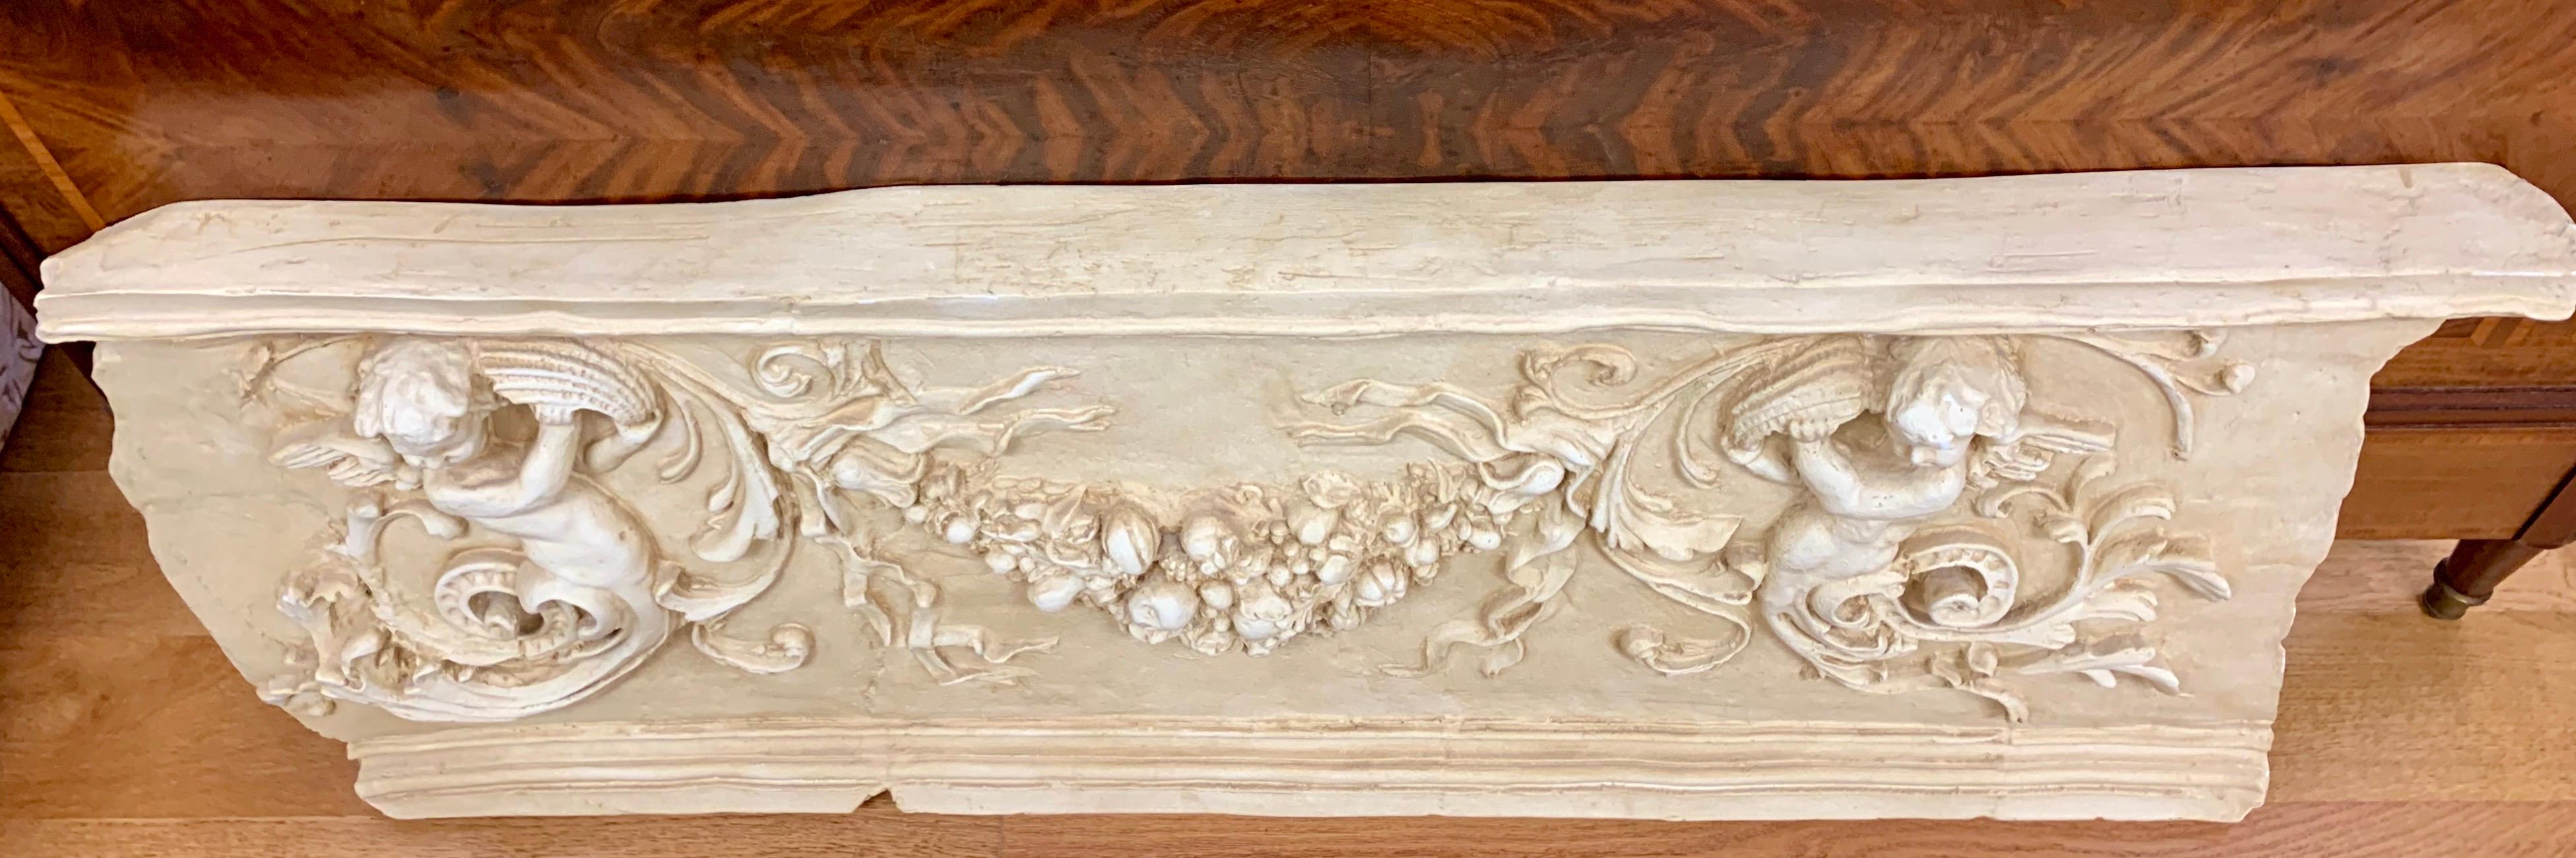 Resin Impressive Neoclassical Carved Putti Architectural Relief Plaque